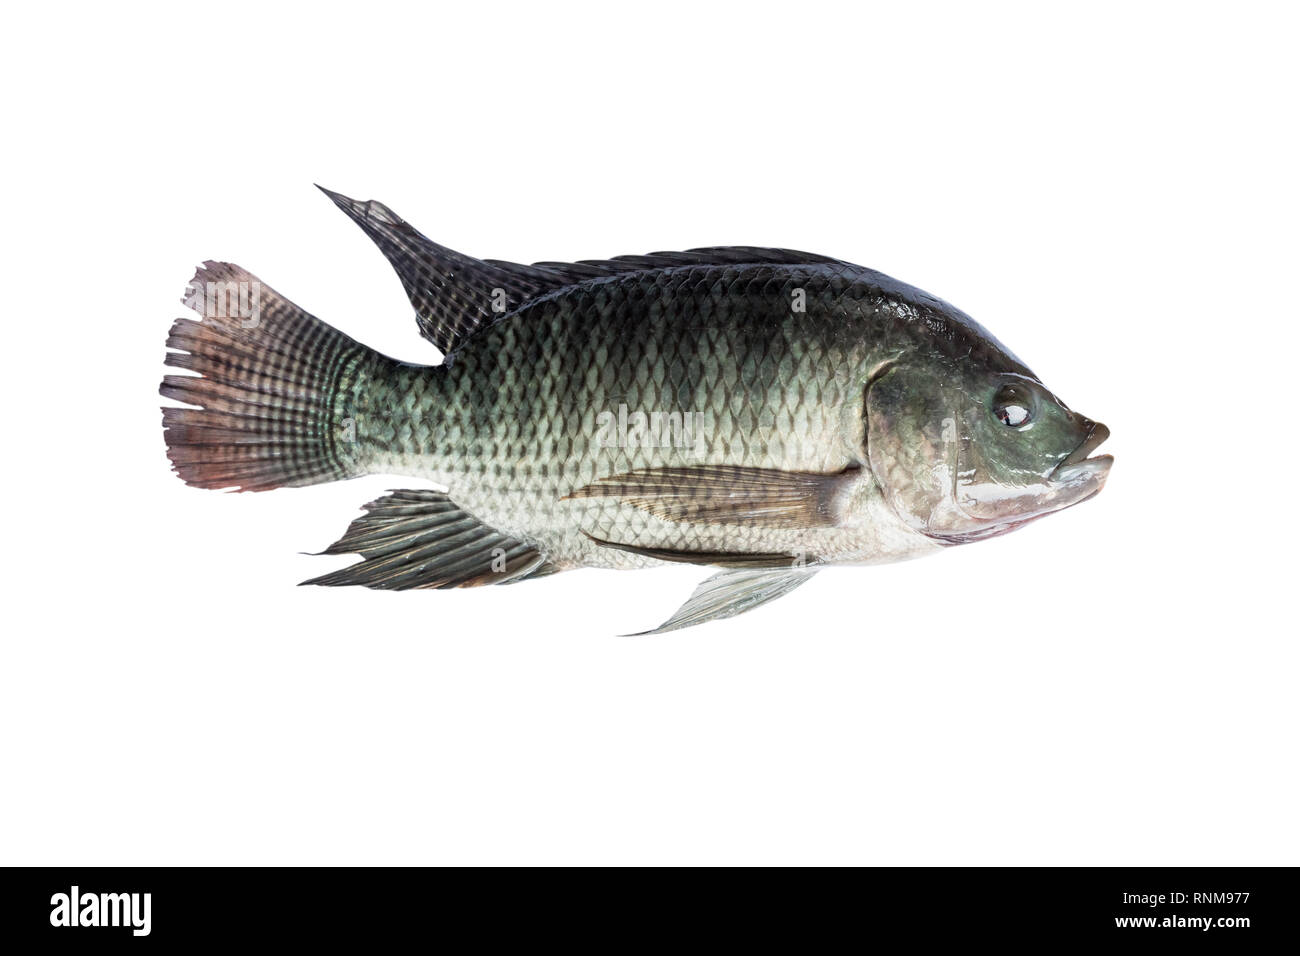 Tilapia fish isolate on white background Stock Photo